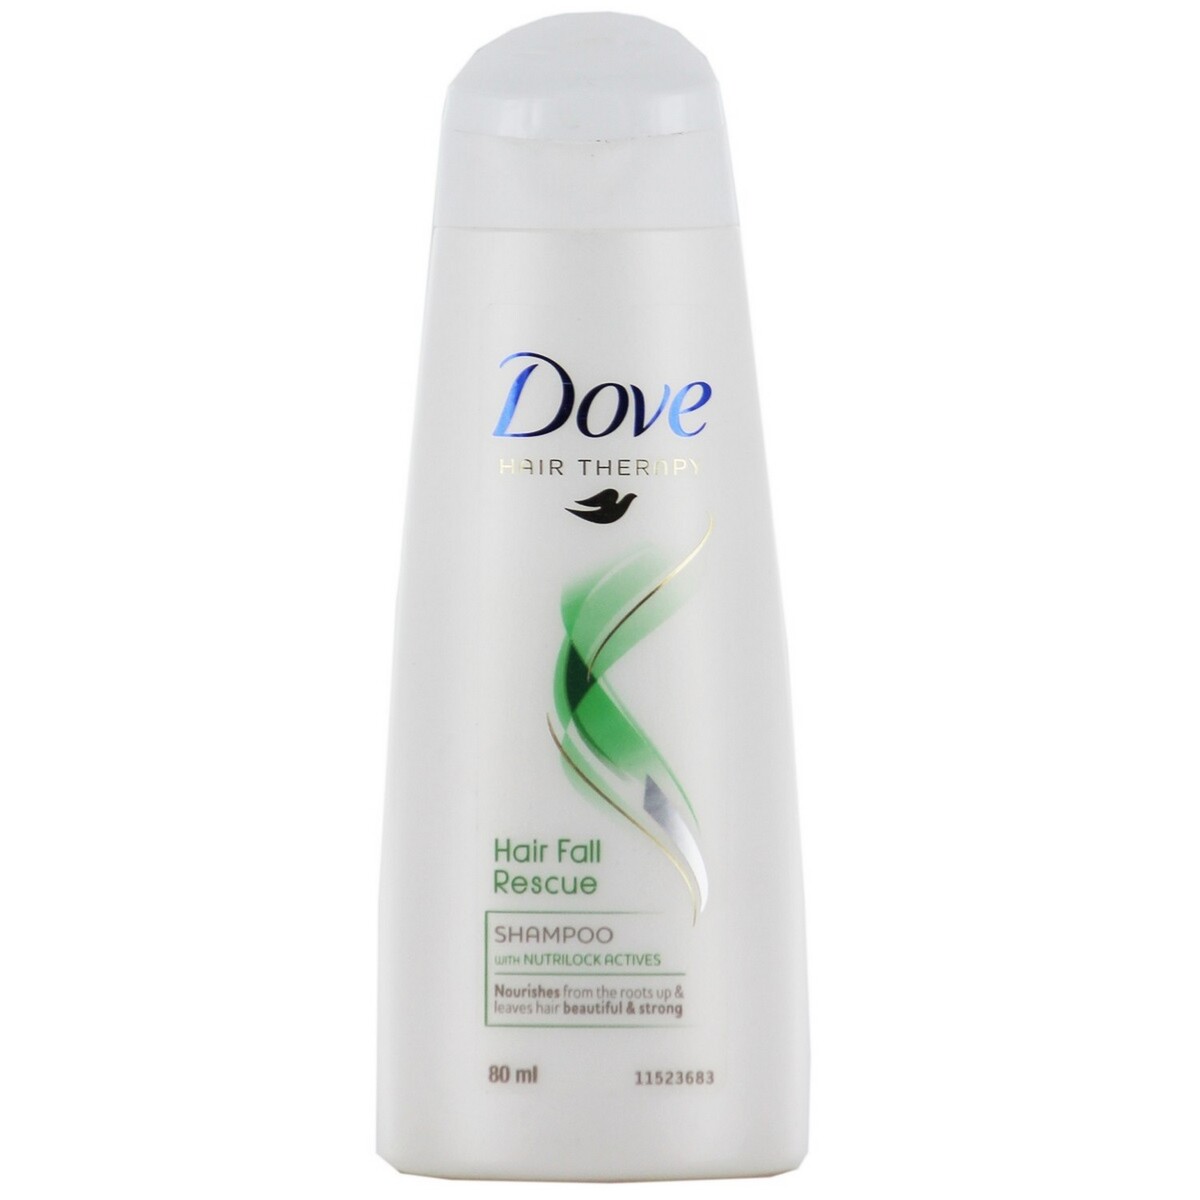 Buy Dove Shampoo Hair Fall Rescue 80ml Online - Lulu Hypermarket India